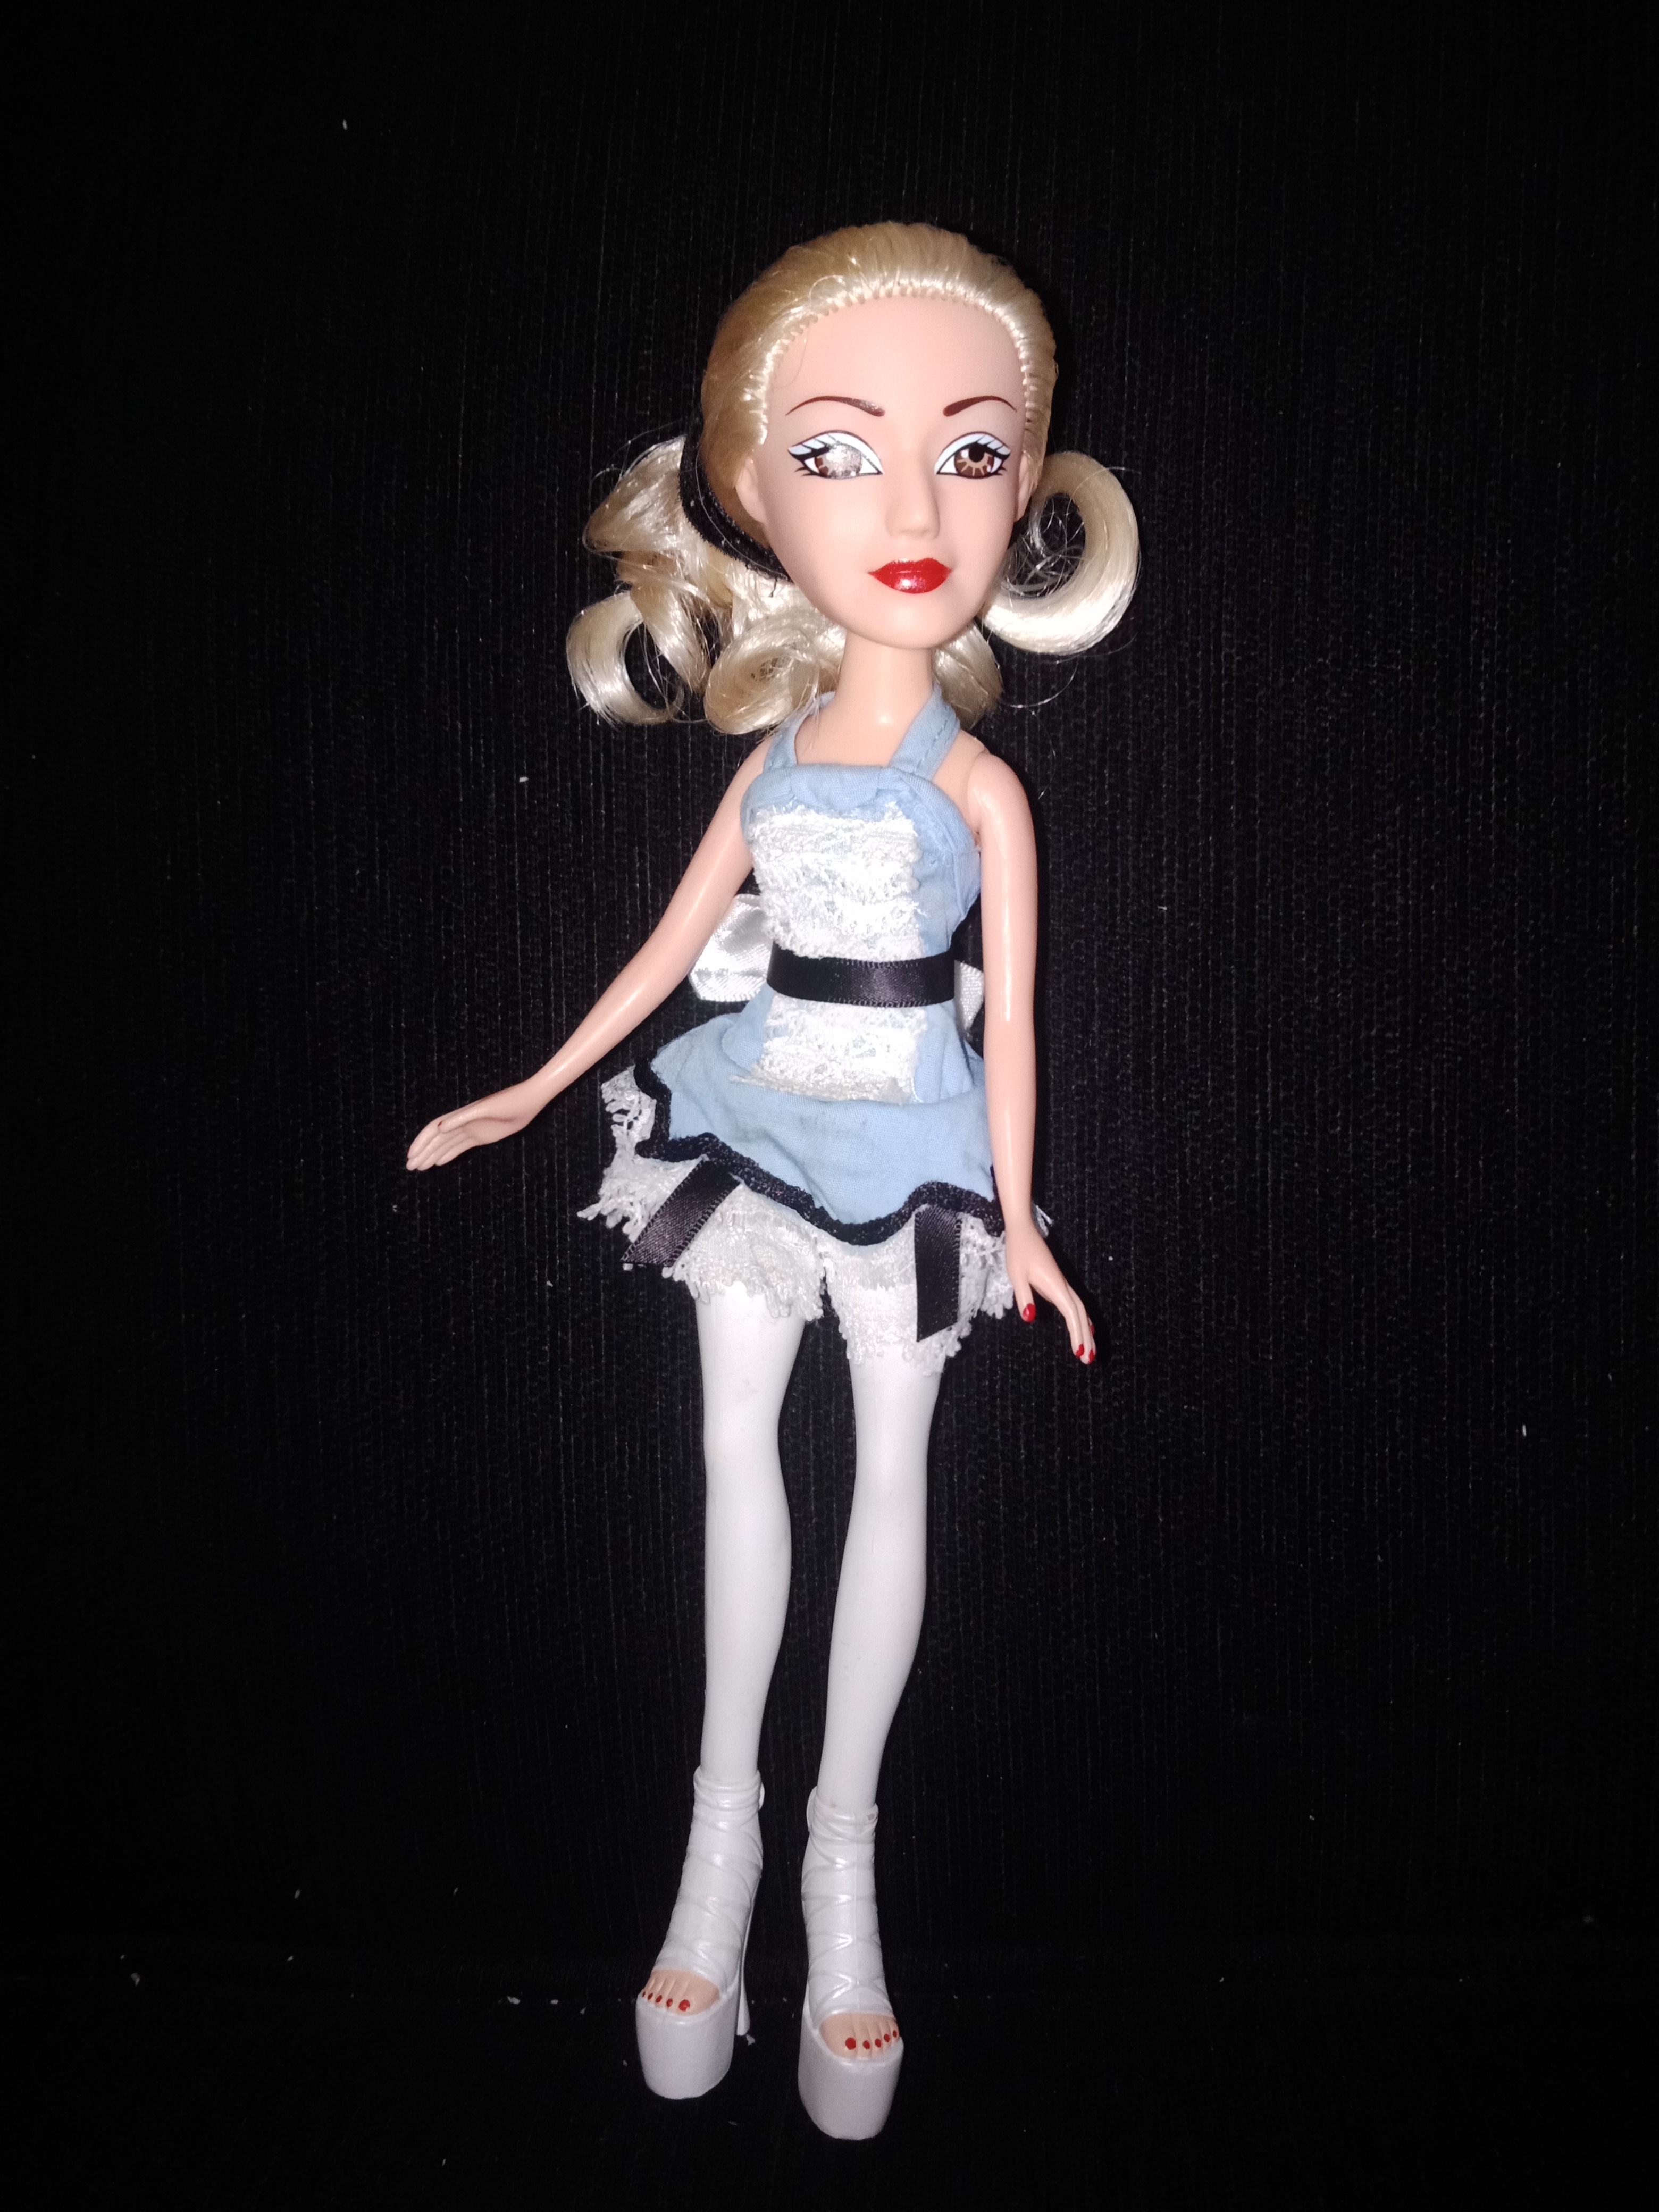 Gwen Stefanil tik tok Alice doll produced by Huckleberry Toys